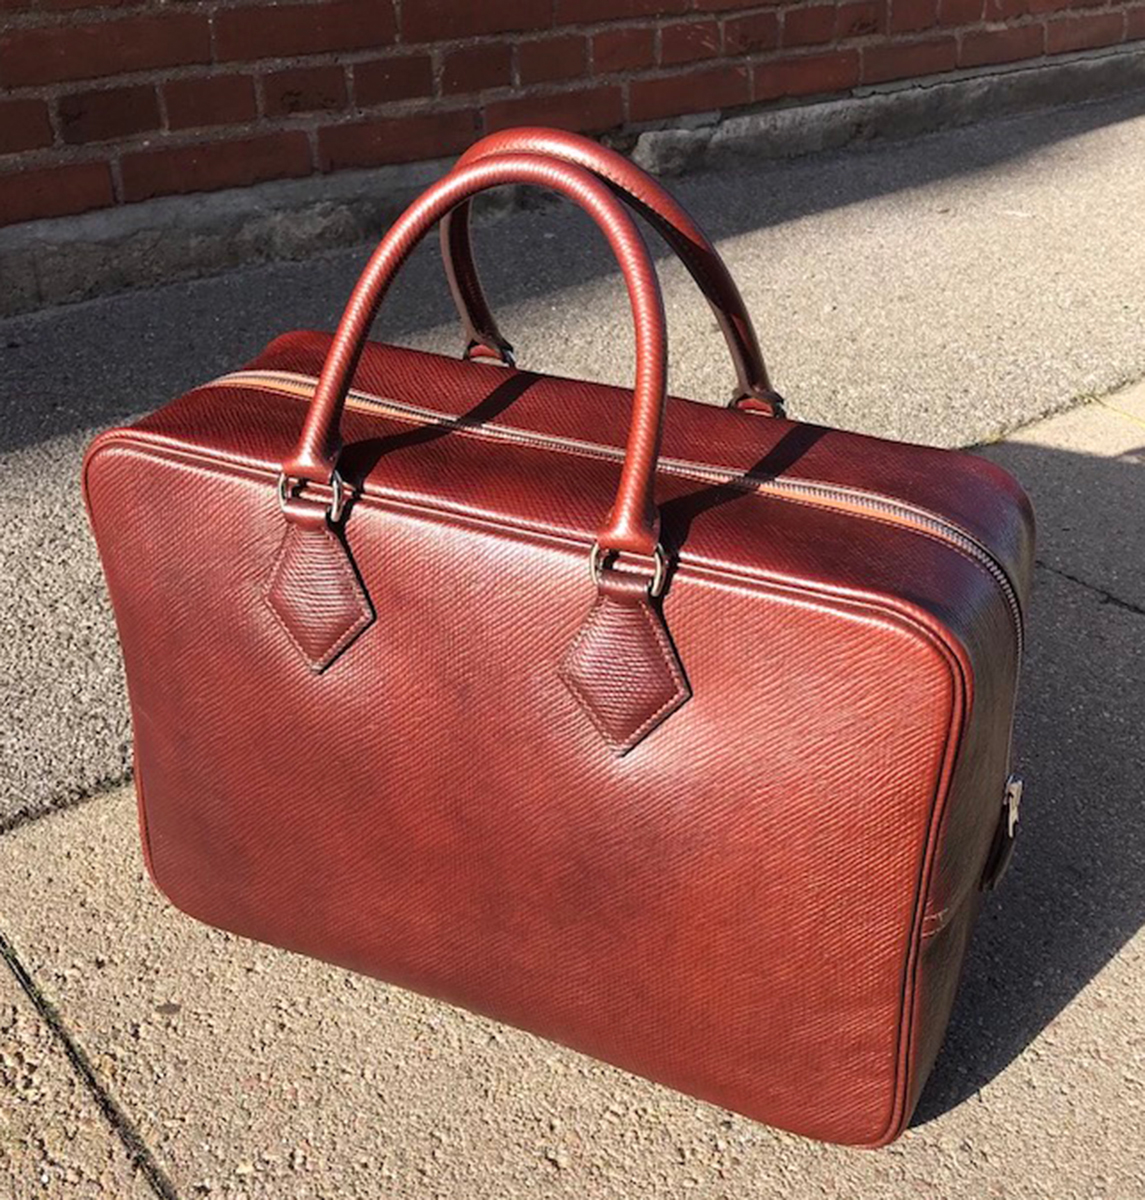 Volynka Leather (here in a Plume bag) has a distinctive color and diagonal grain. Photo via TPFer @allanrvj.